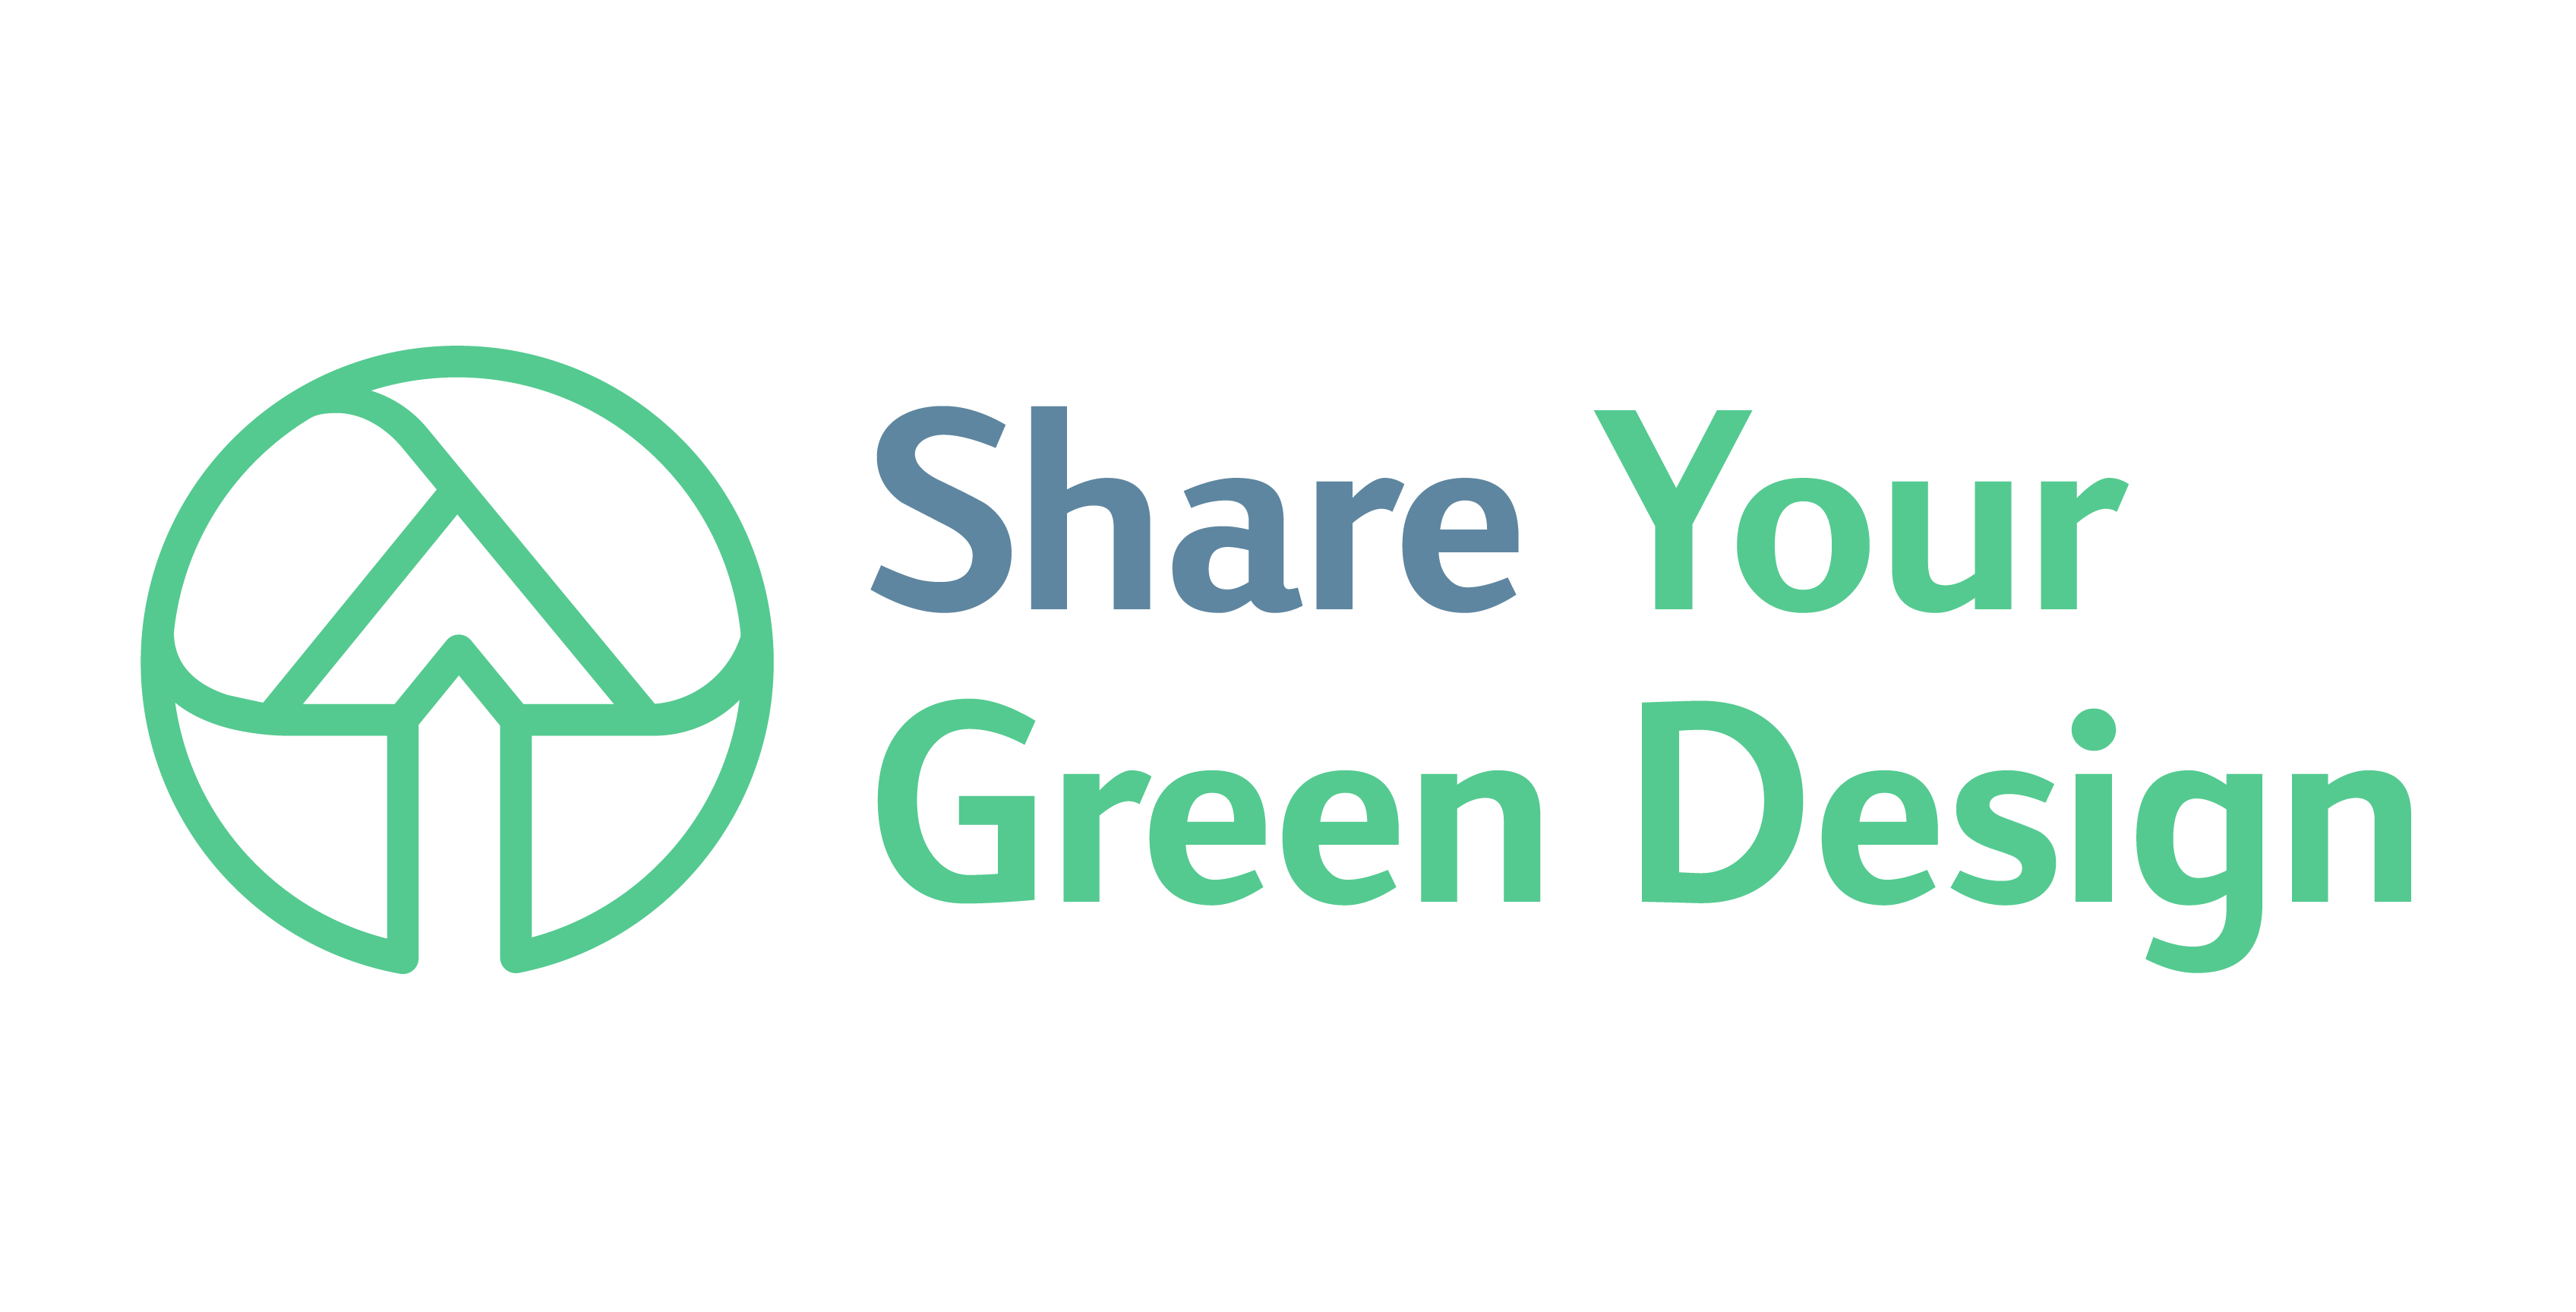 Share Your Green Design logo